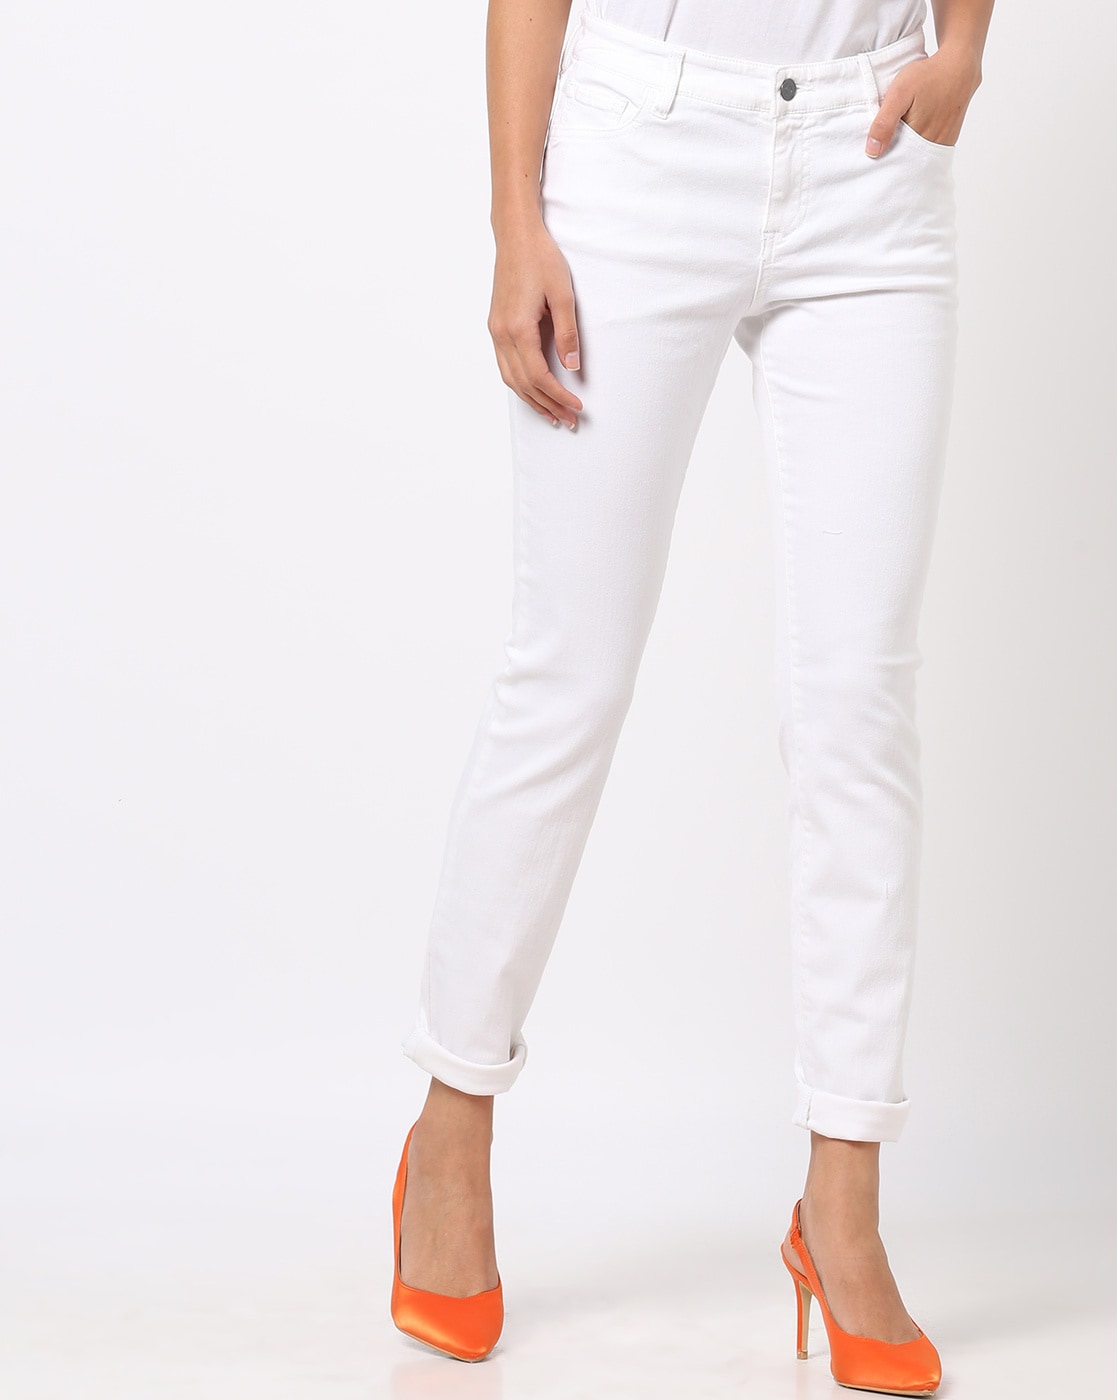 jeans for women white